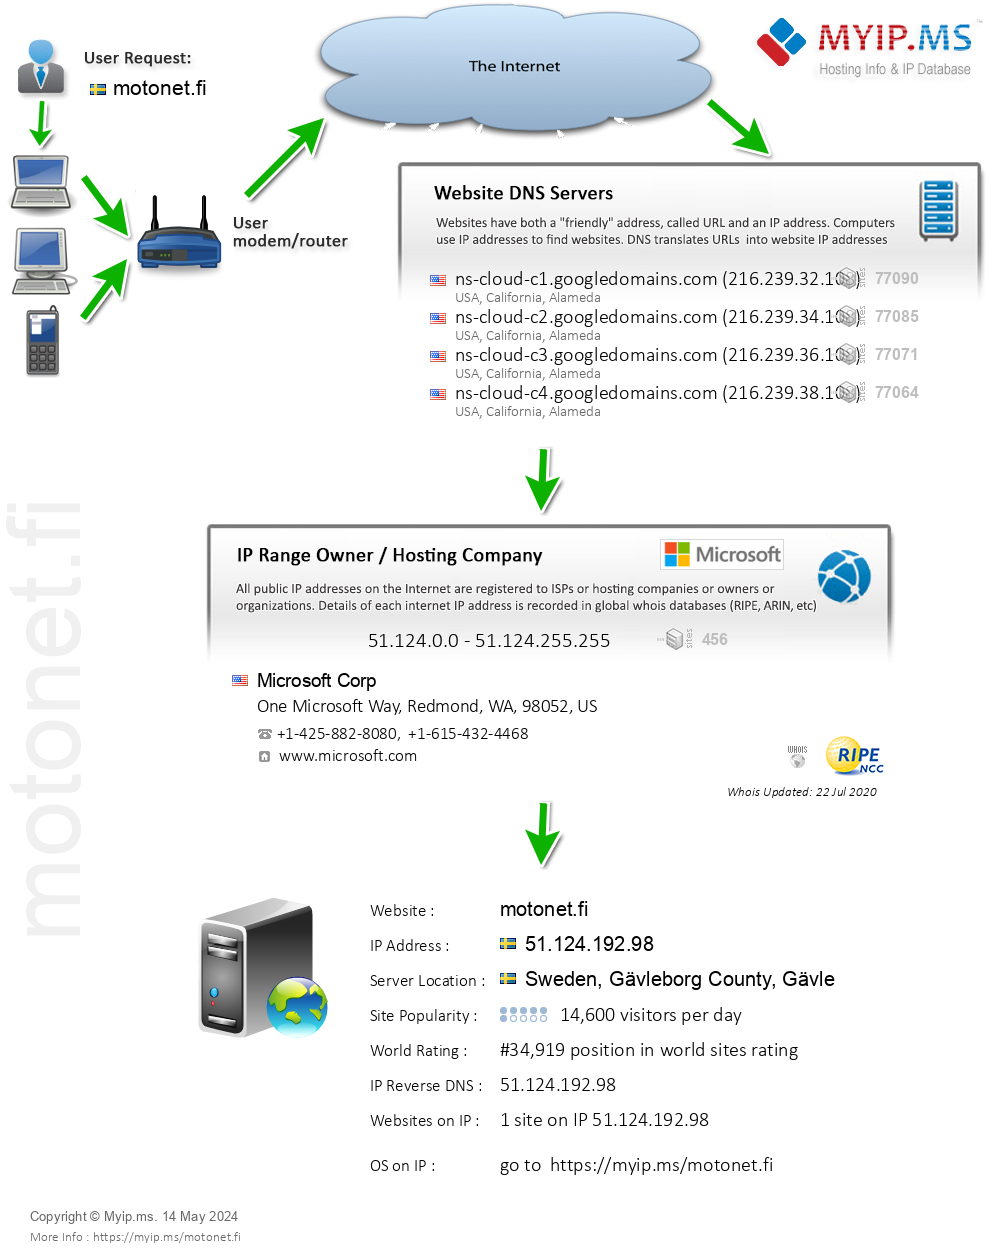 Motonet.fi - Website Hosting Visual IP Diagram